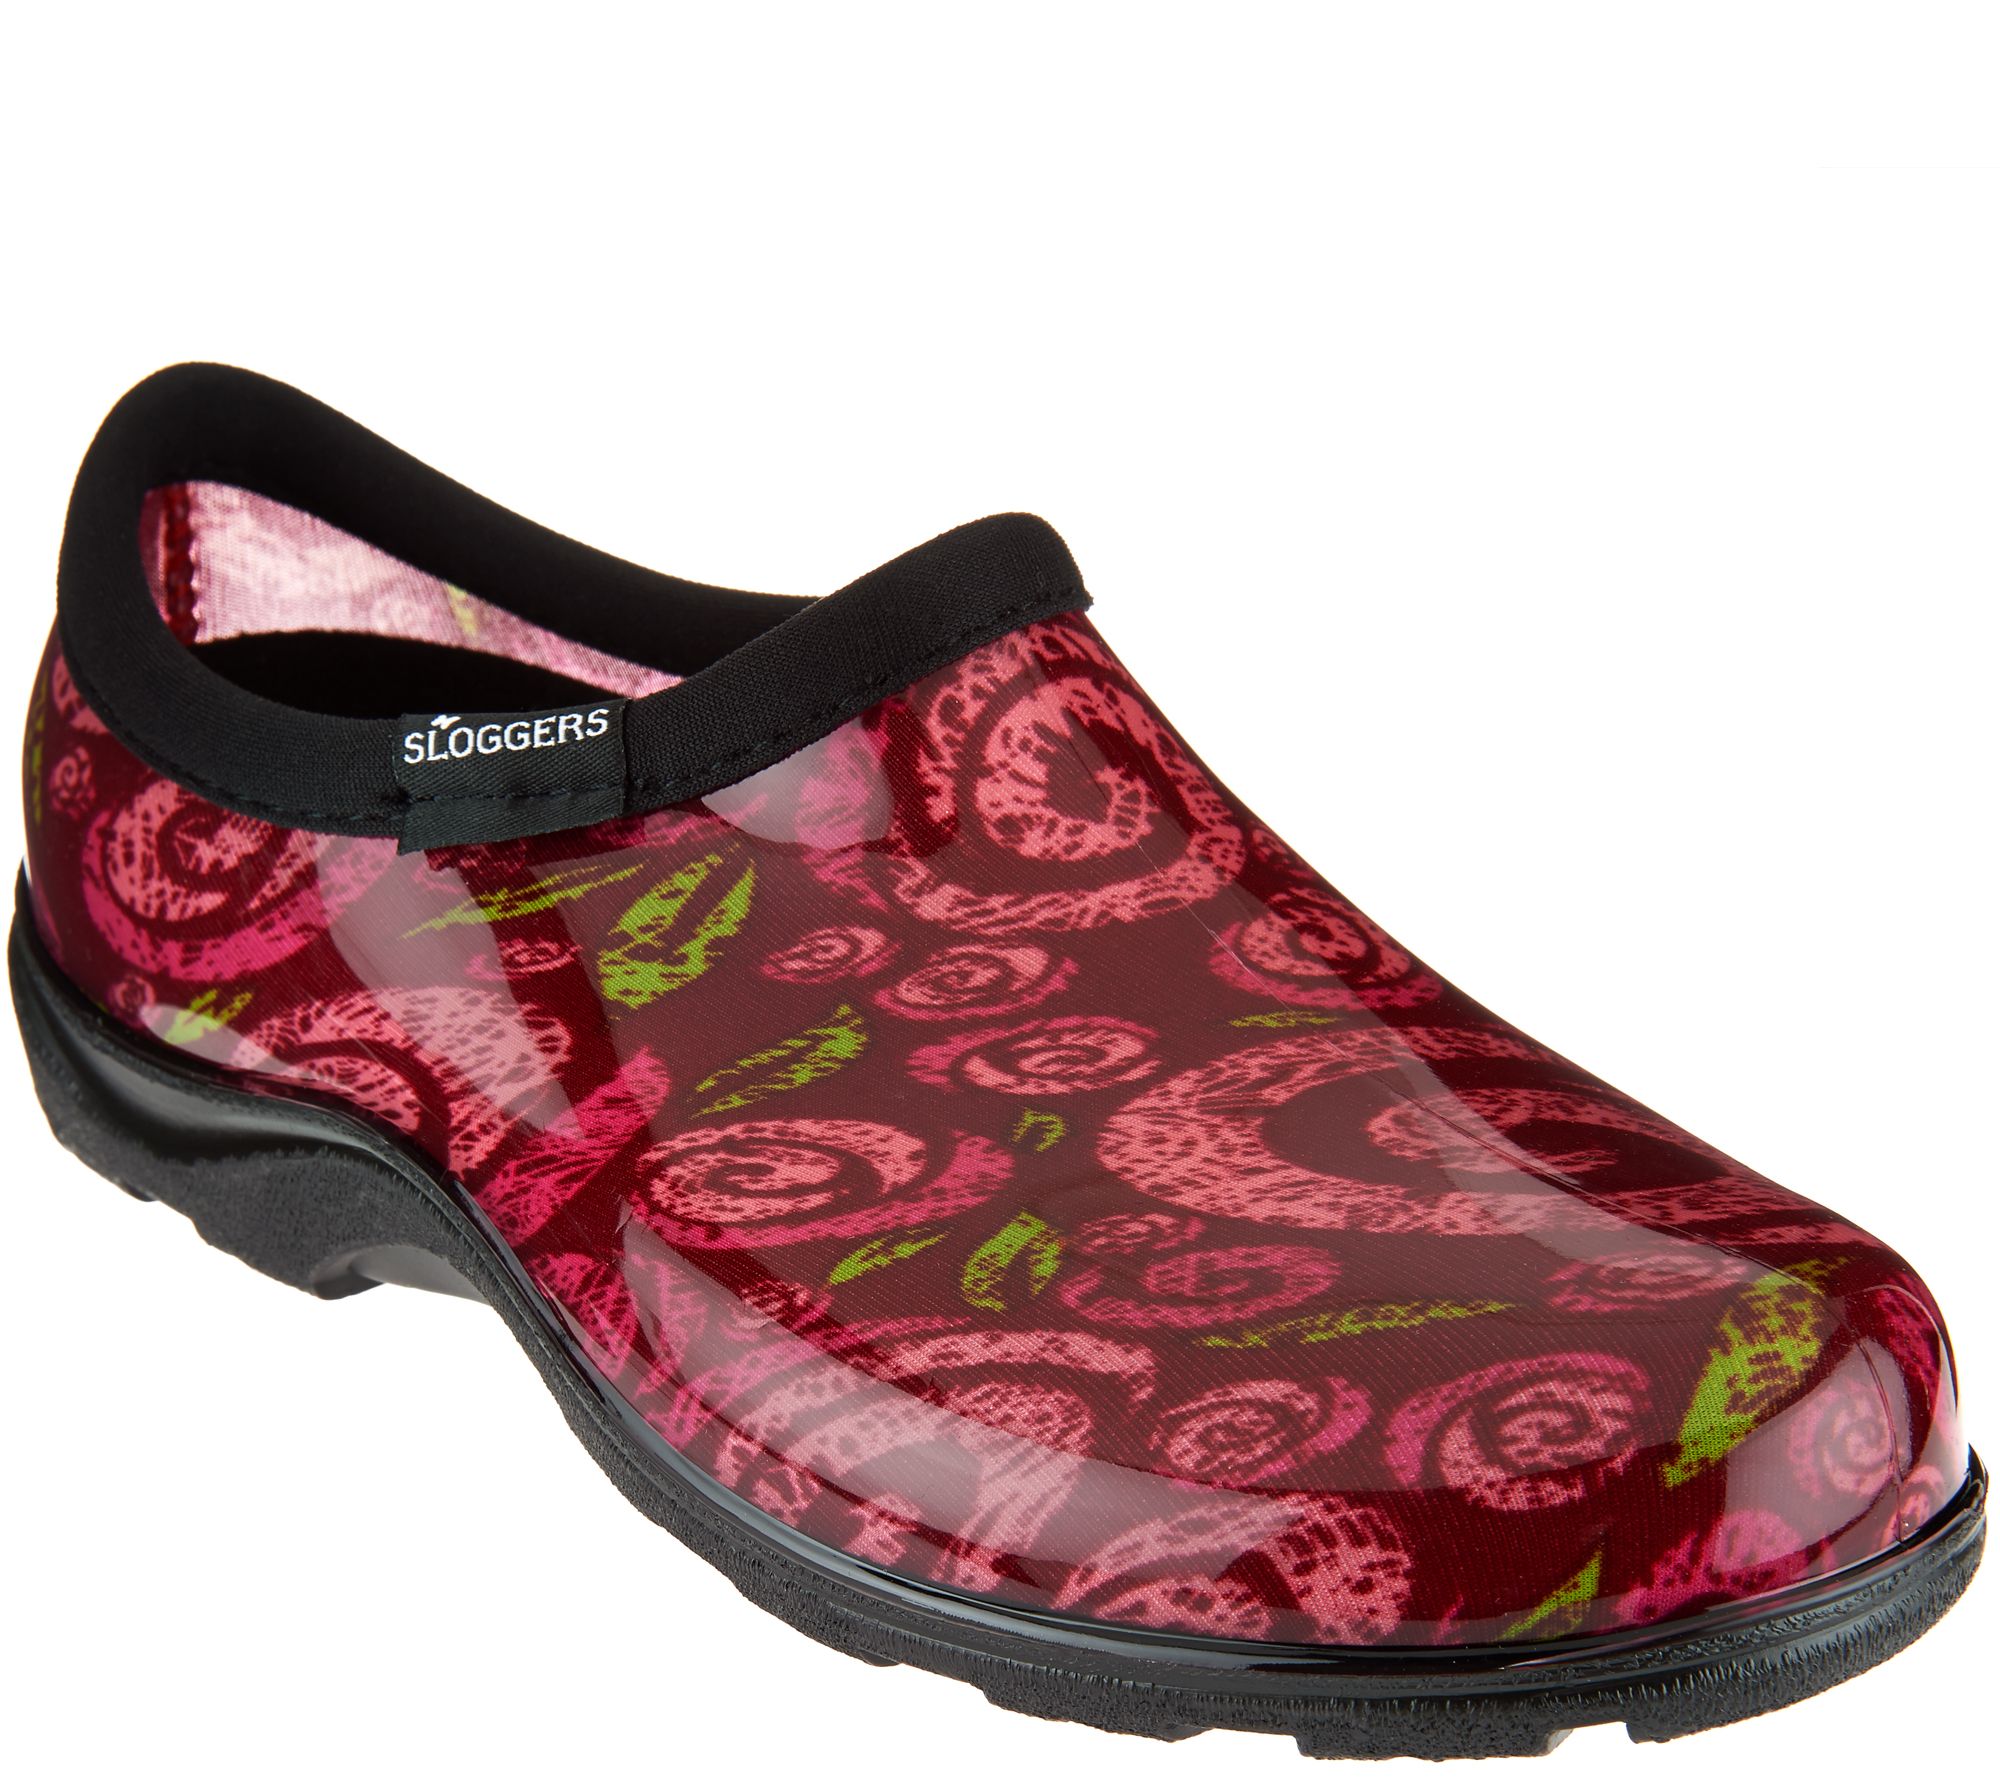 Sloggers Waterproof Swirl Design Garden Shoe w/ Comfort Insole - QVC.com